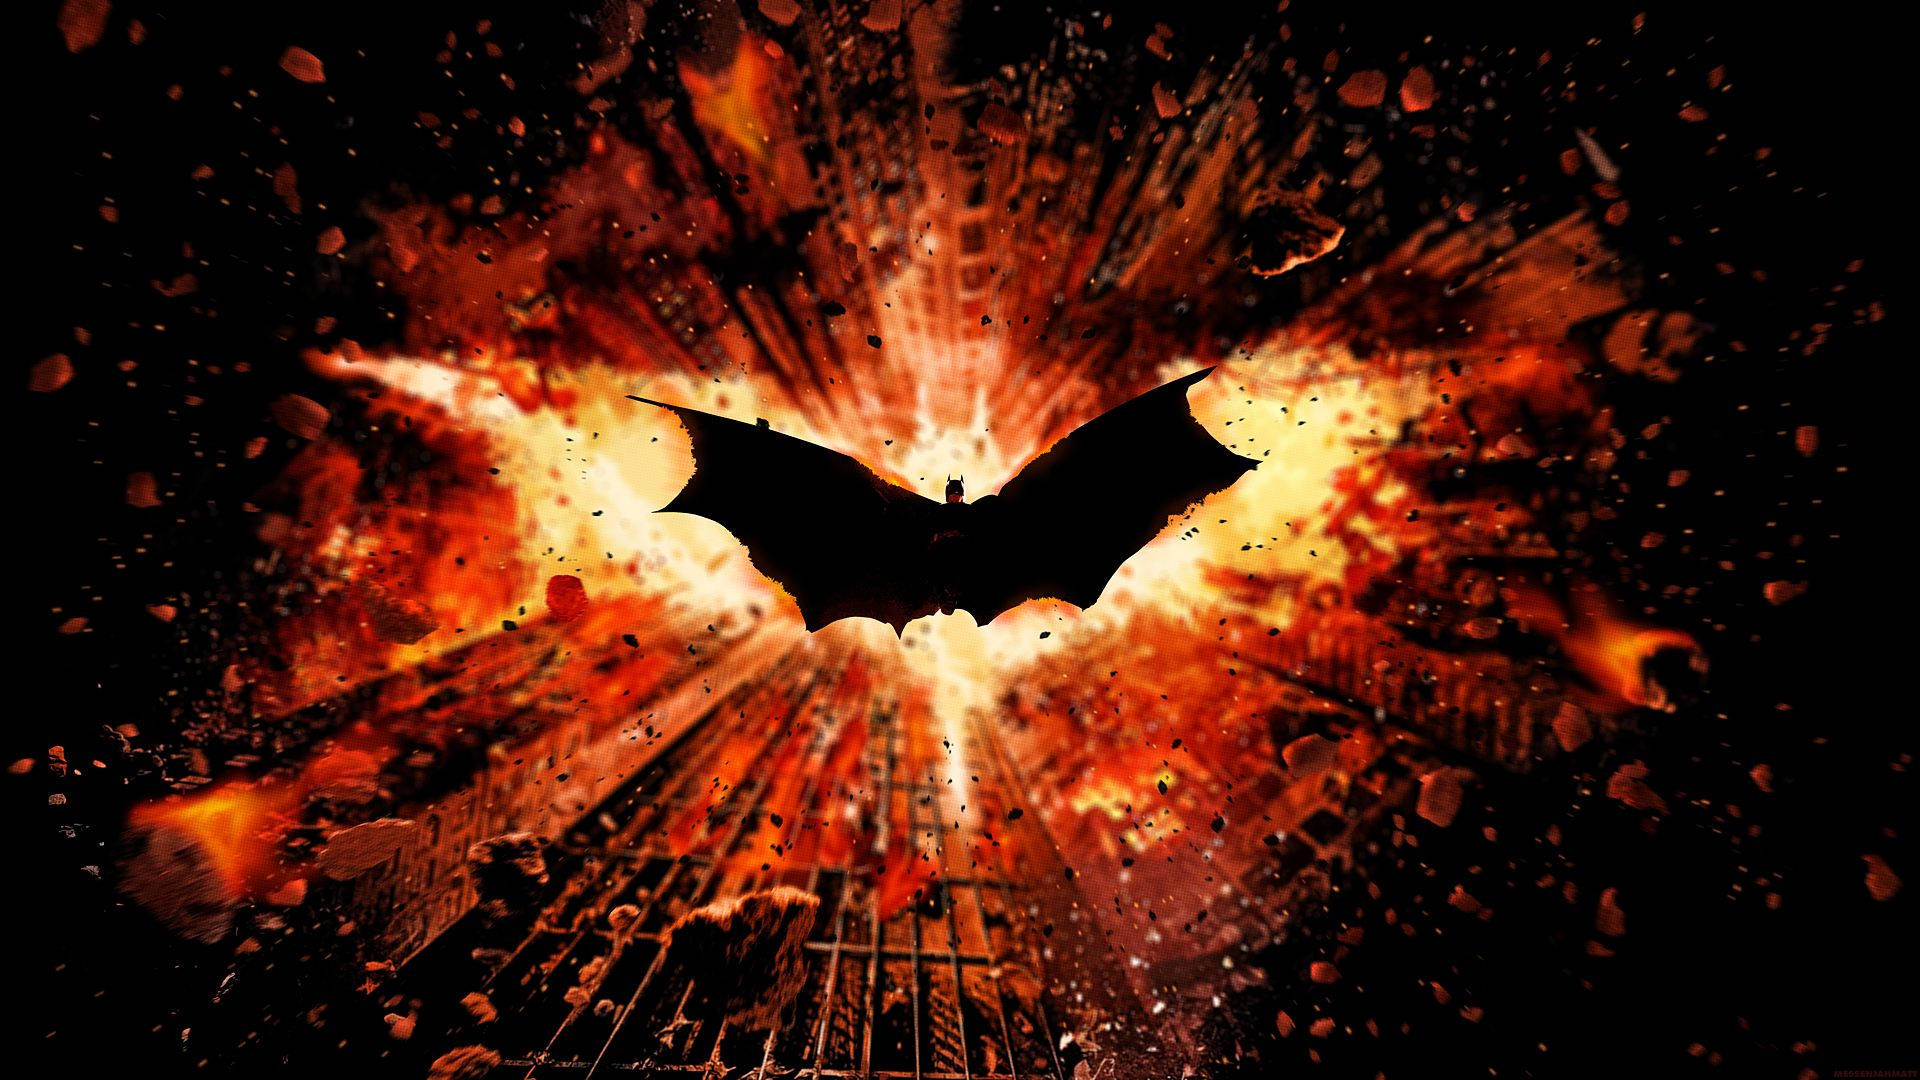 Awesome Batman Arkham Knight Wallpaper